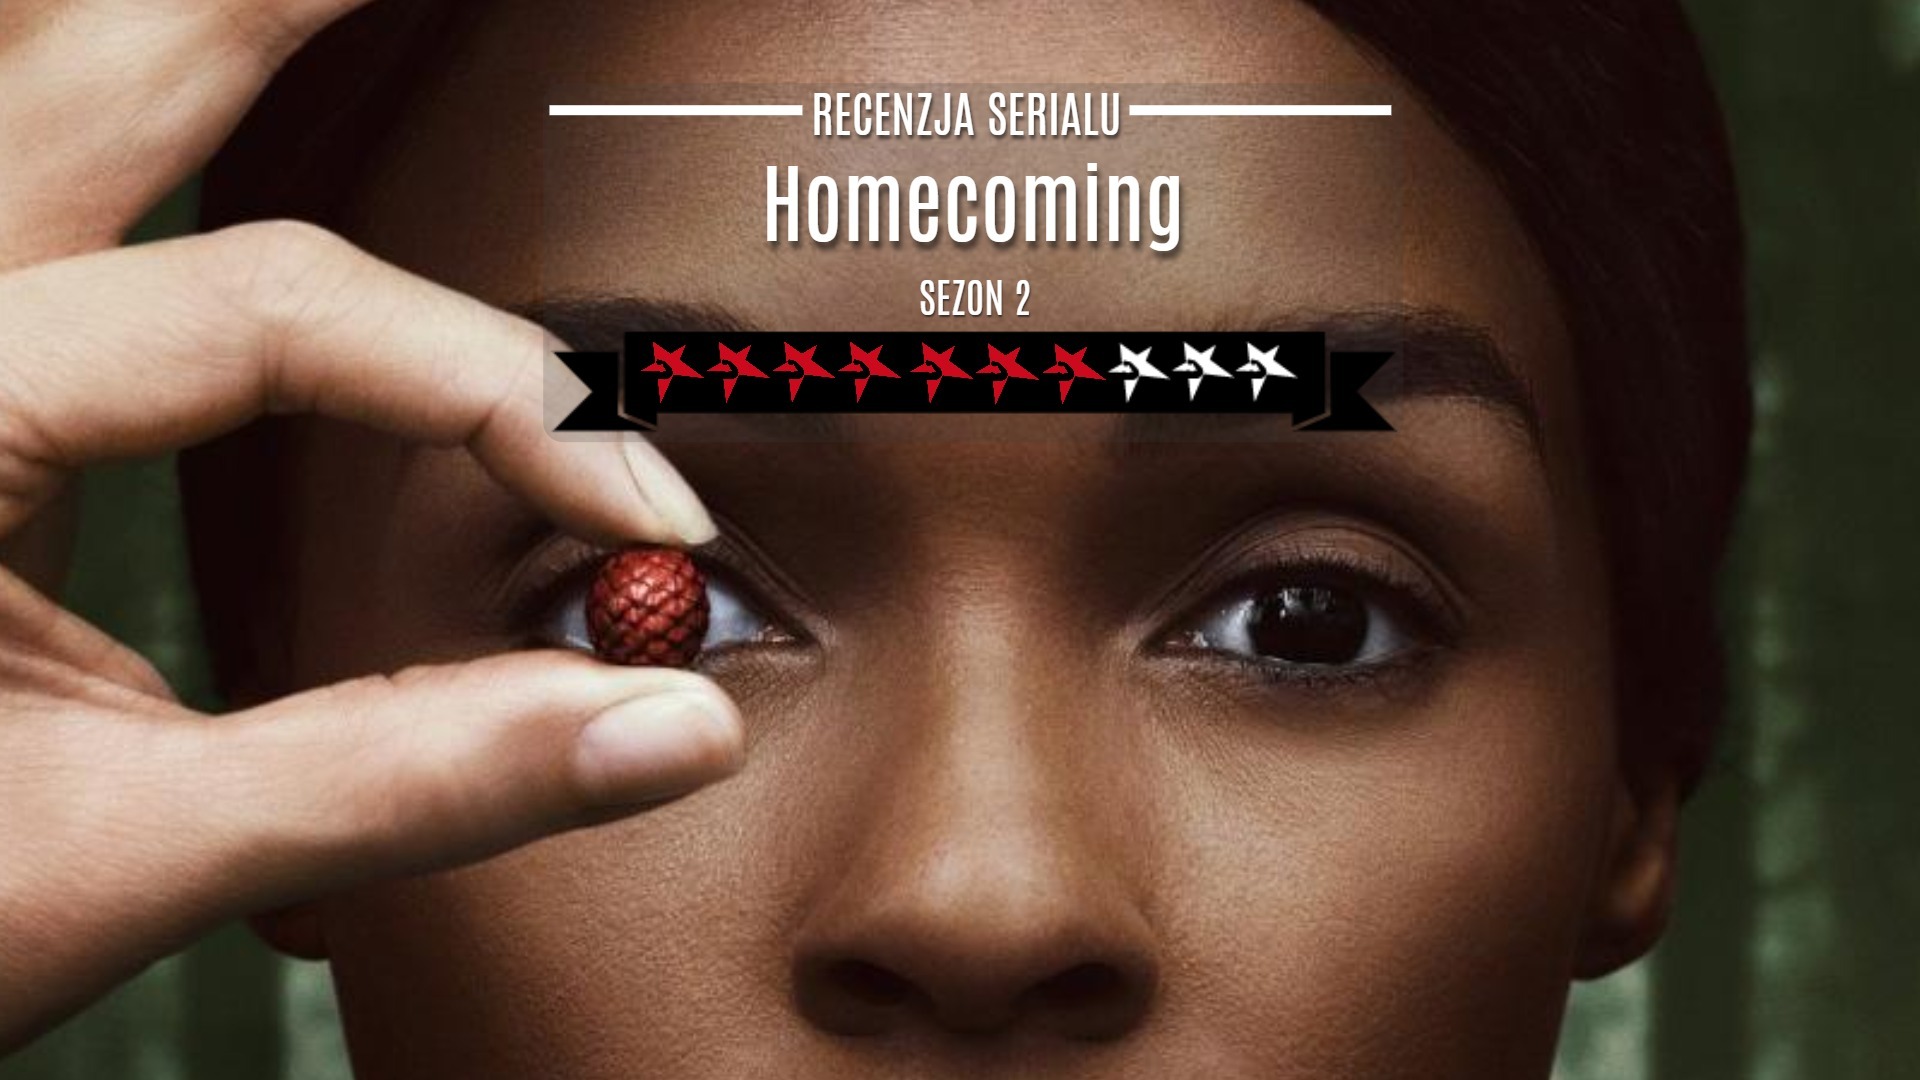 Homecoming sezon 2 recenzja serial Amazon Prime Video